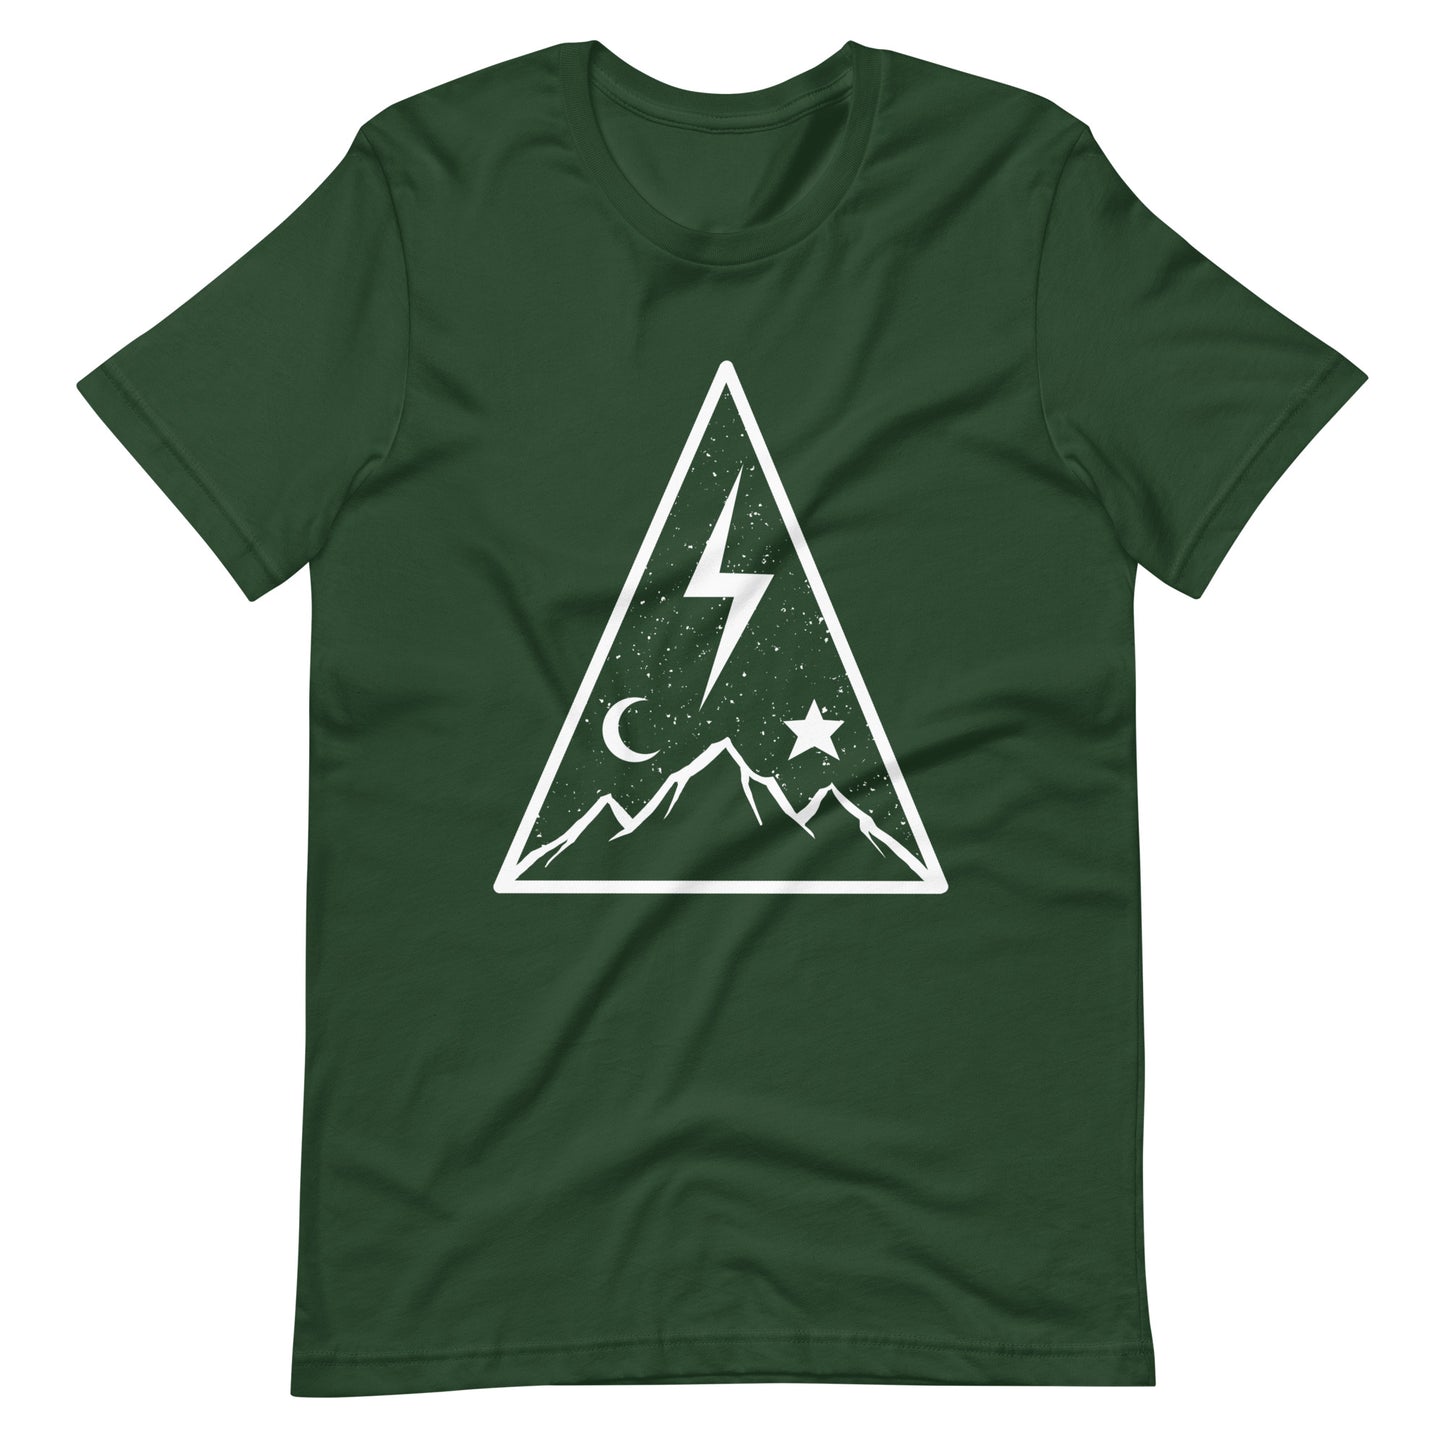 Coalesce - Men's t-shirt - Forest Front